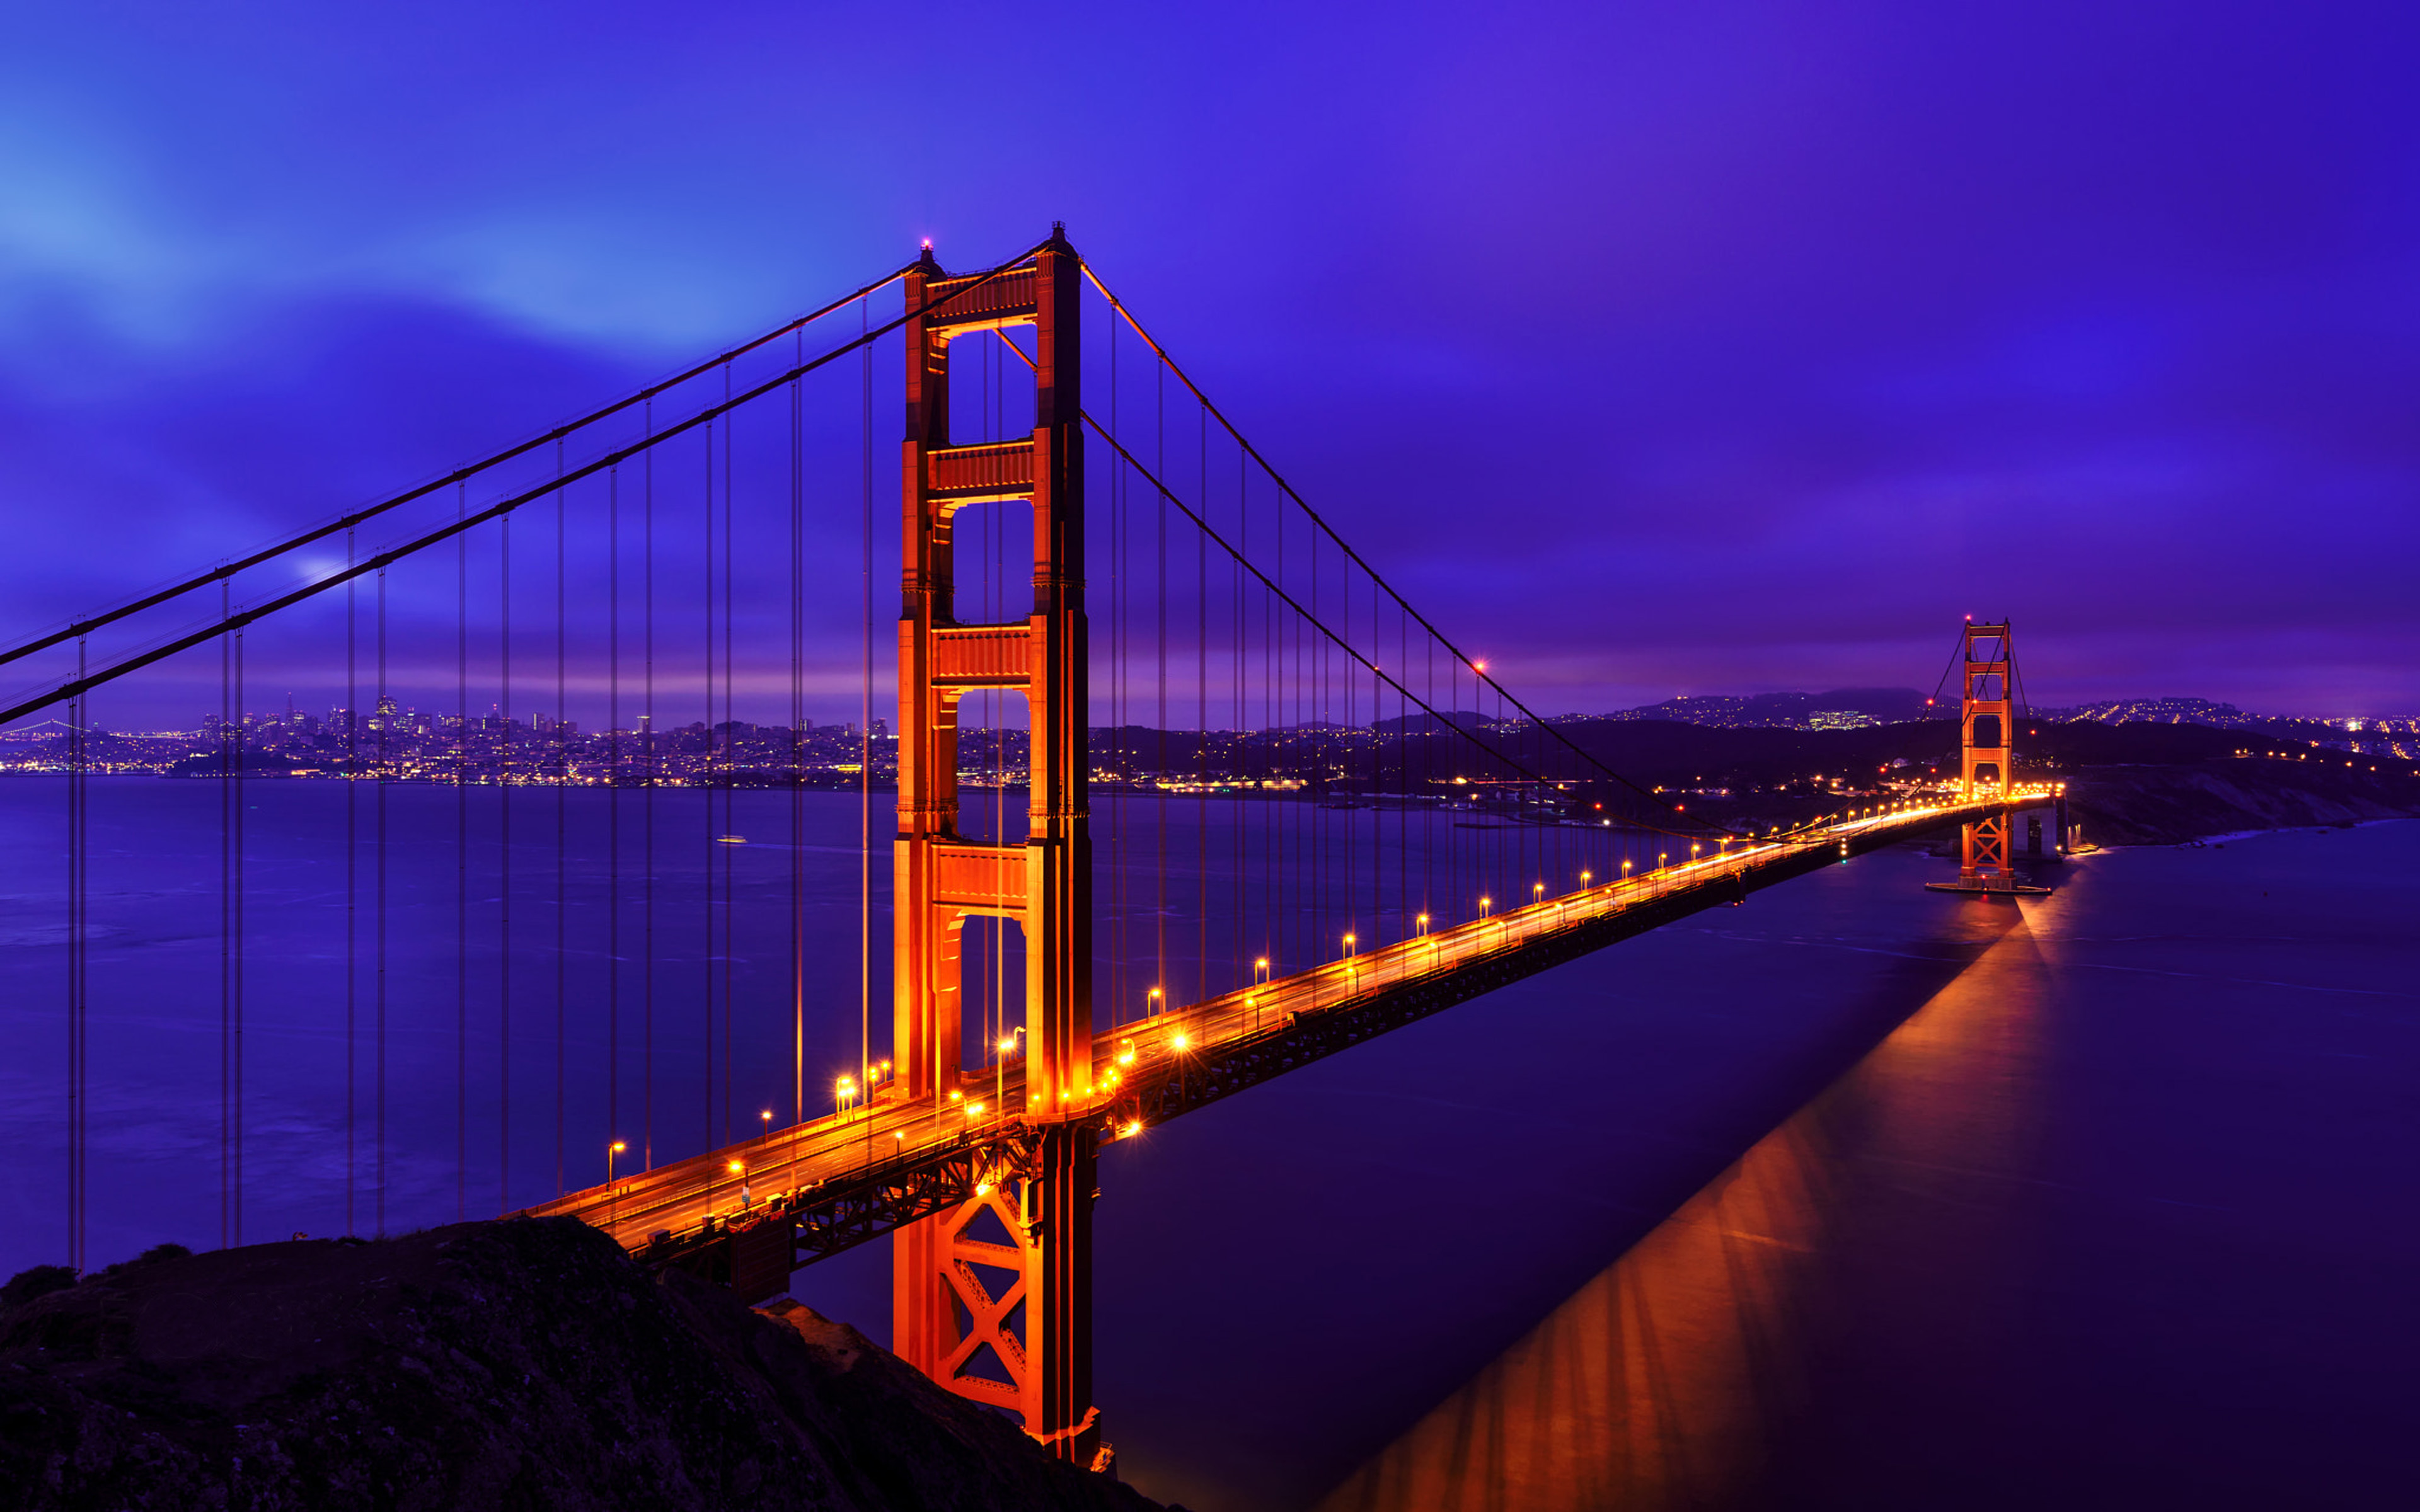 Golden Gate Bridge Blue Night Suspension Bridge In San Francisco California  United States 4k Ultra Hd Wallpaper For Desktop And Mobile Phones :  